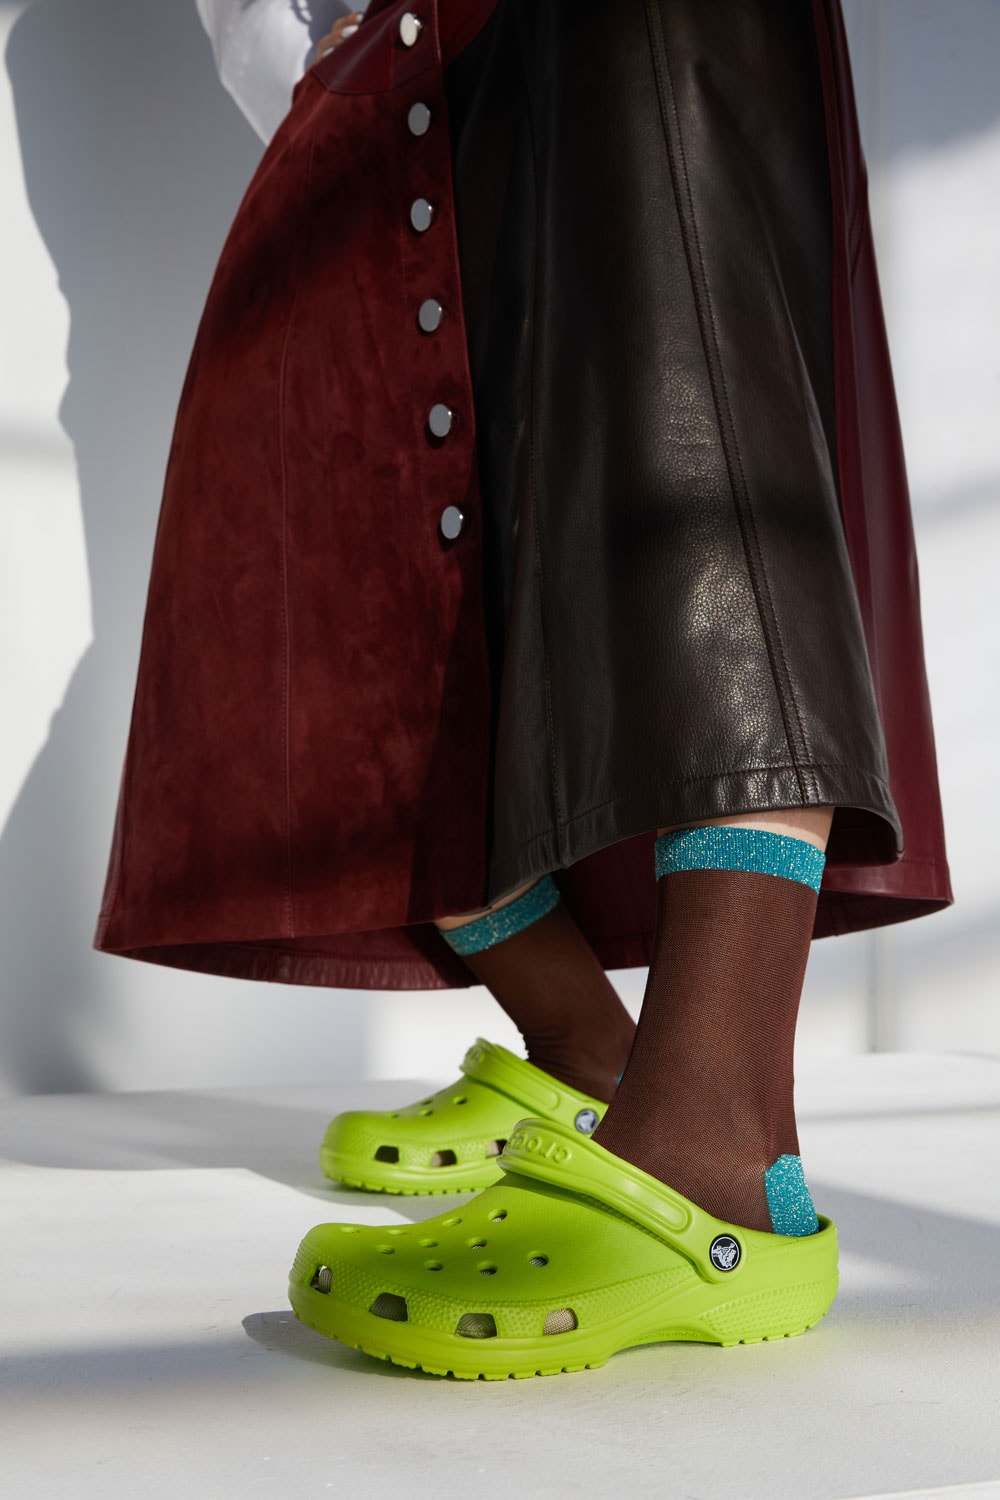 10 Fashion Forward Ways to Make a Statement Wearing Crocs  